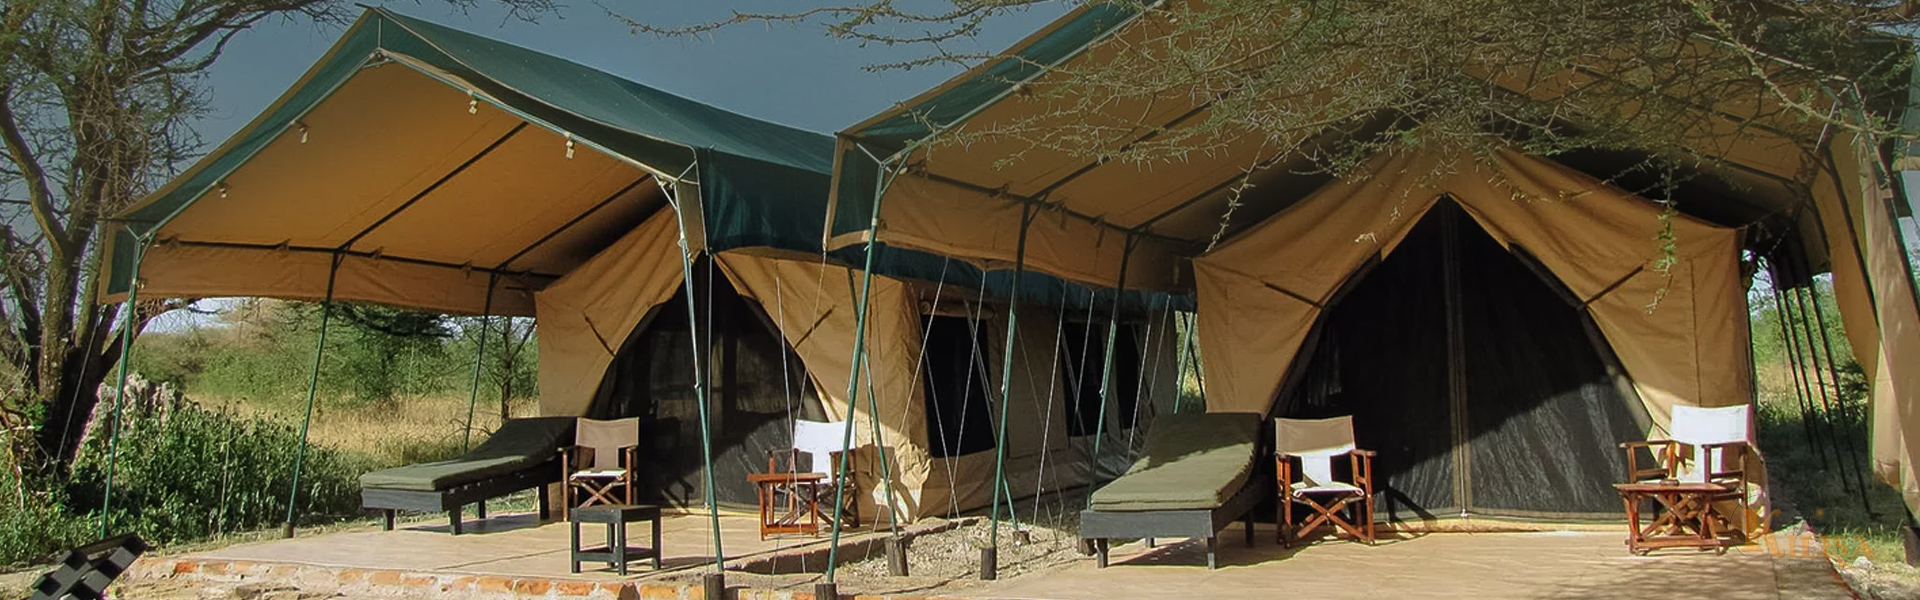 Tanzania Budget Camping Safari (Tarangire, Ngorongoro Crater & Lake Manyara)